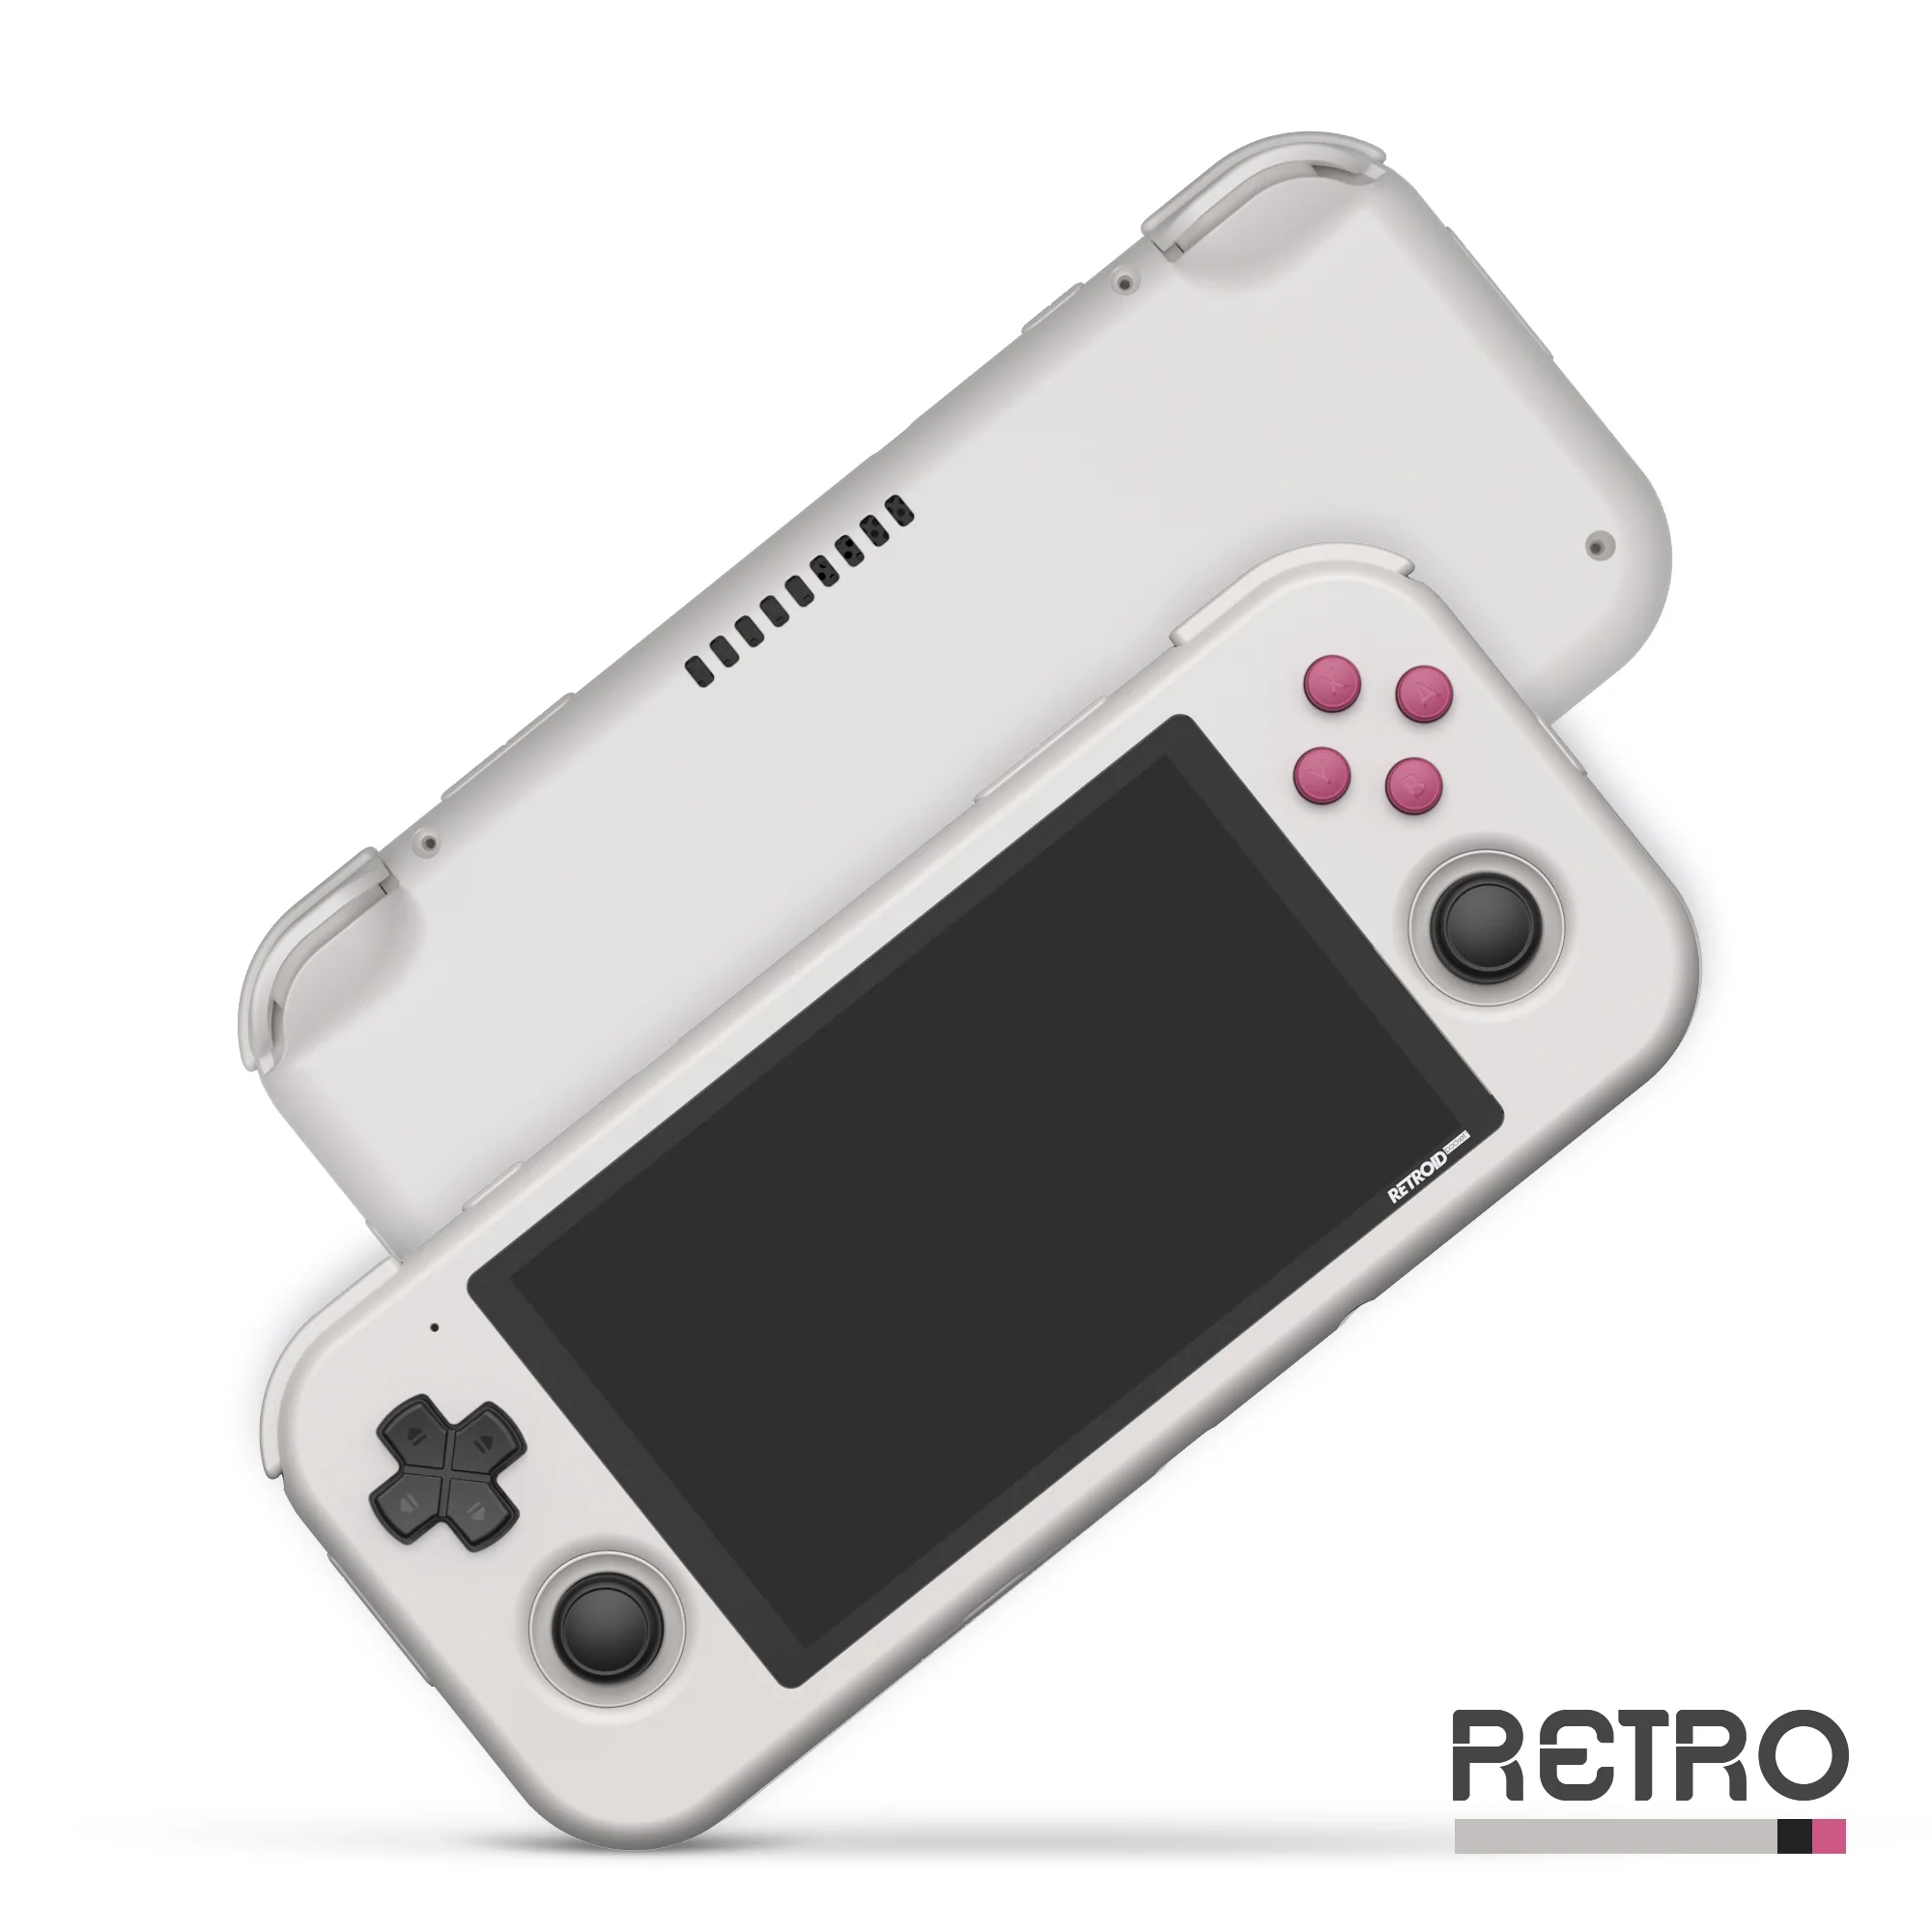 Retroid Pocket 3+ Handheld Retro Gaming System, 16Bit US